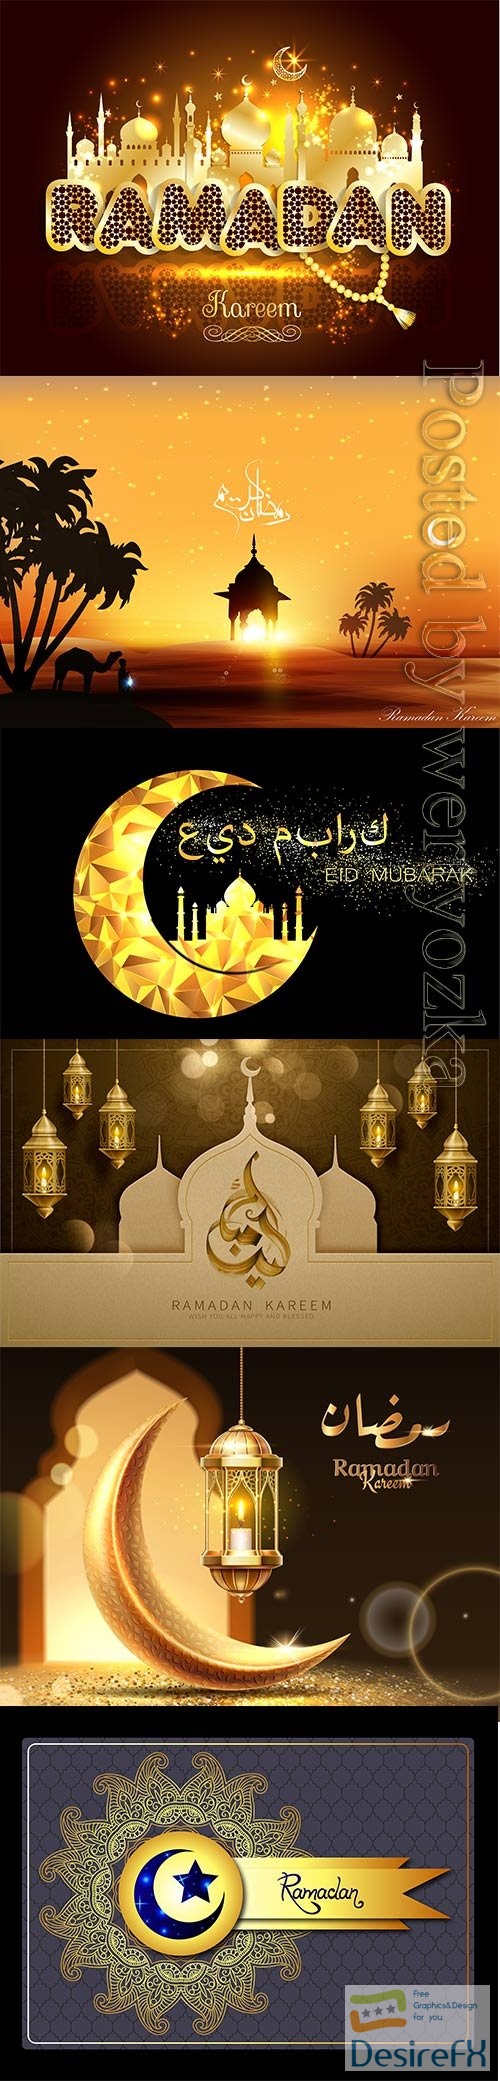 Ramadan kareem, eid mubarak vector illustration